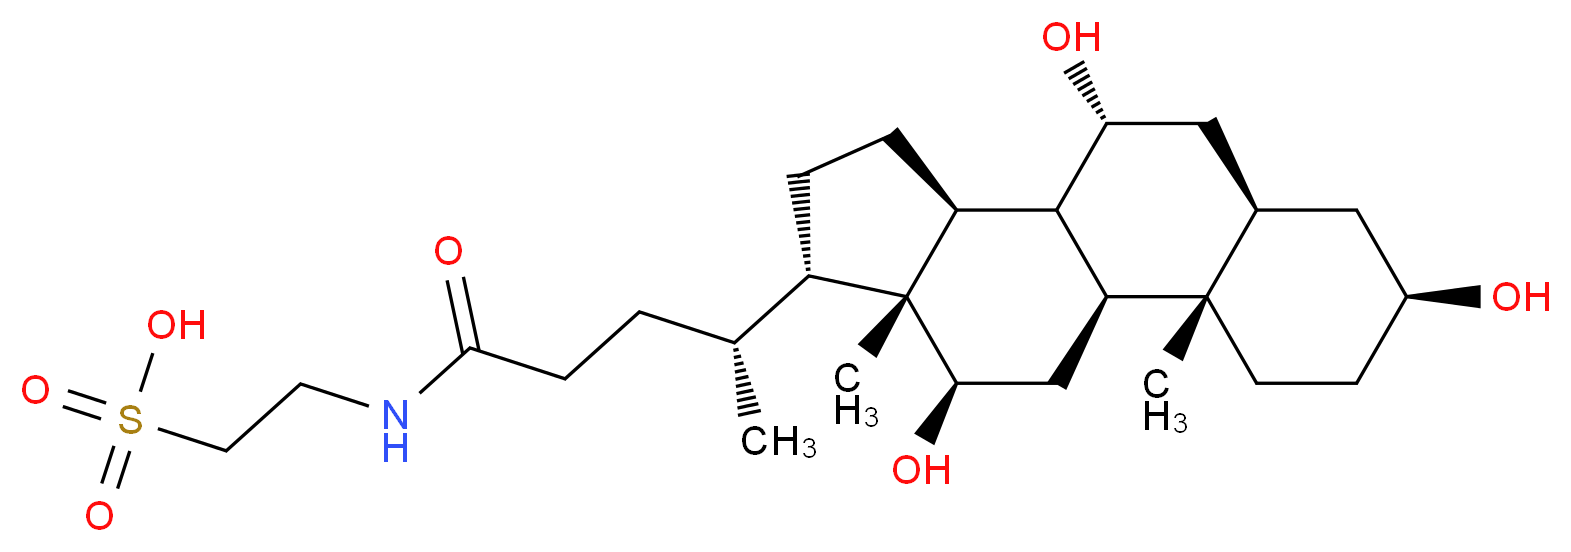 CAS_81-24-3 molecular structure